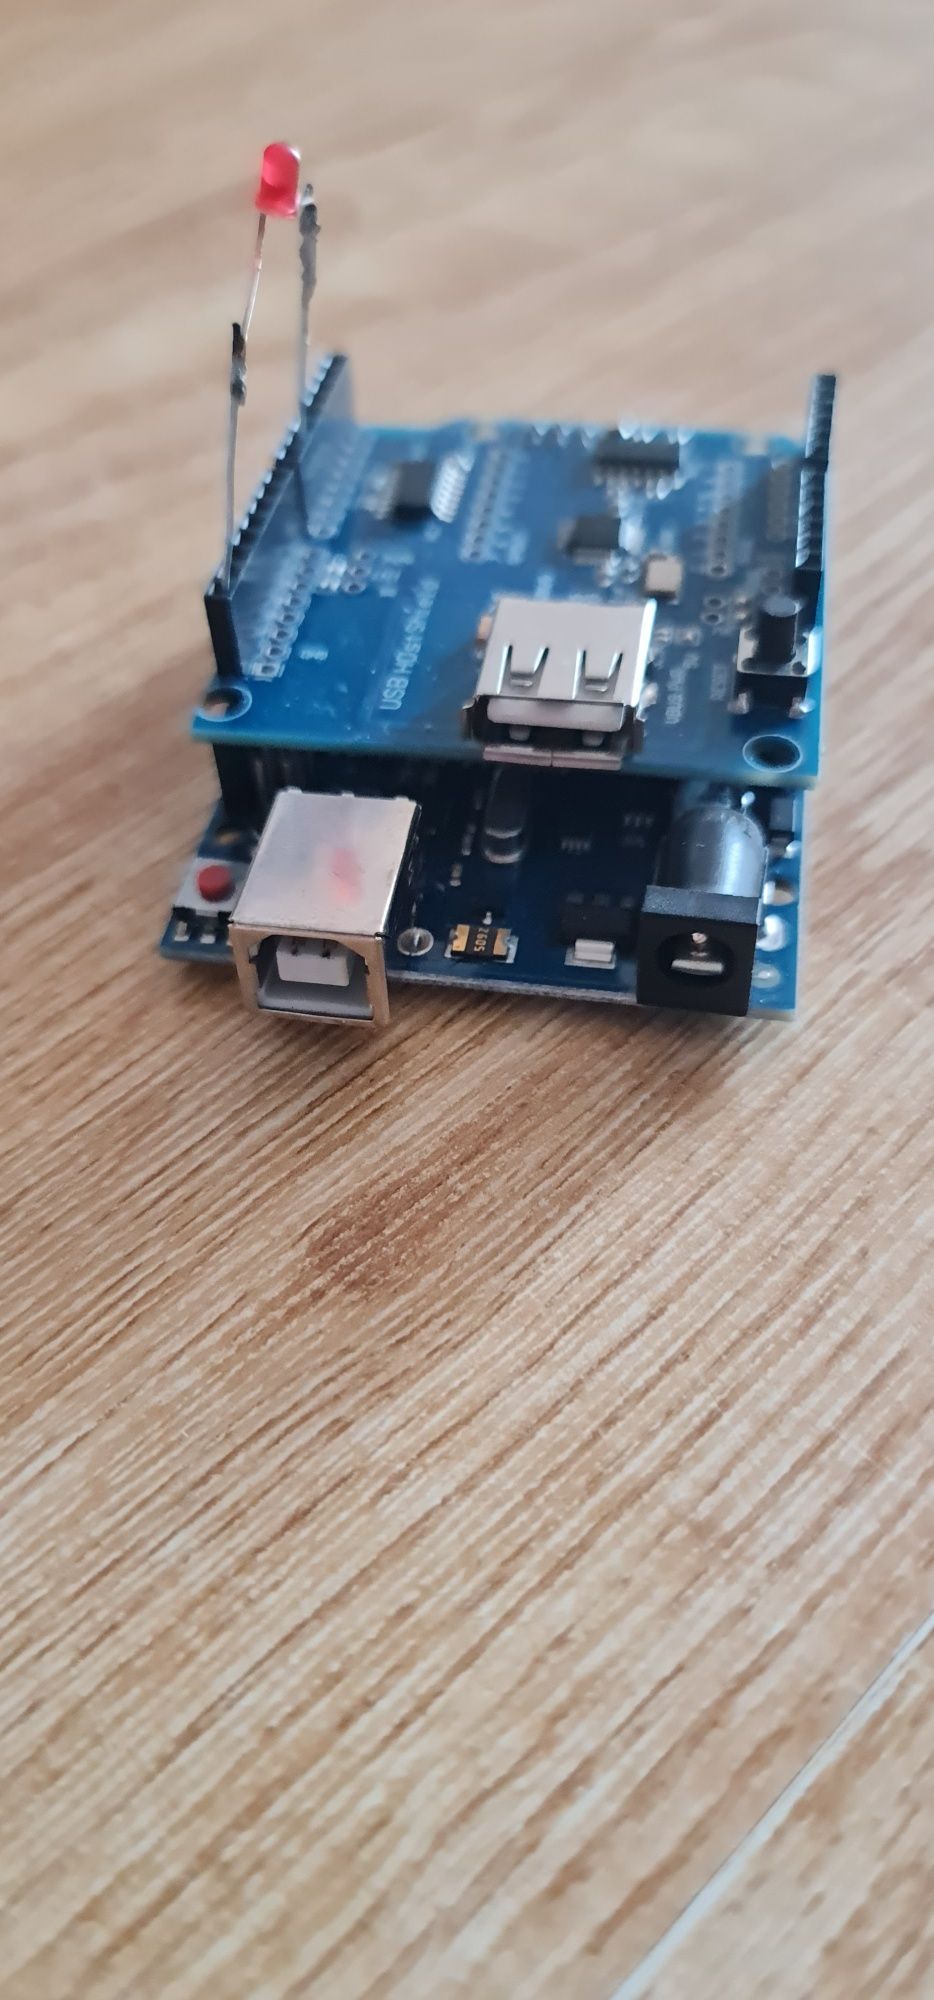 Placa dezvoltare Arduino uno R3